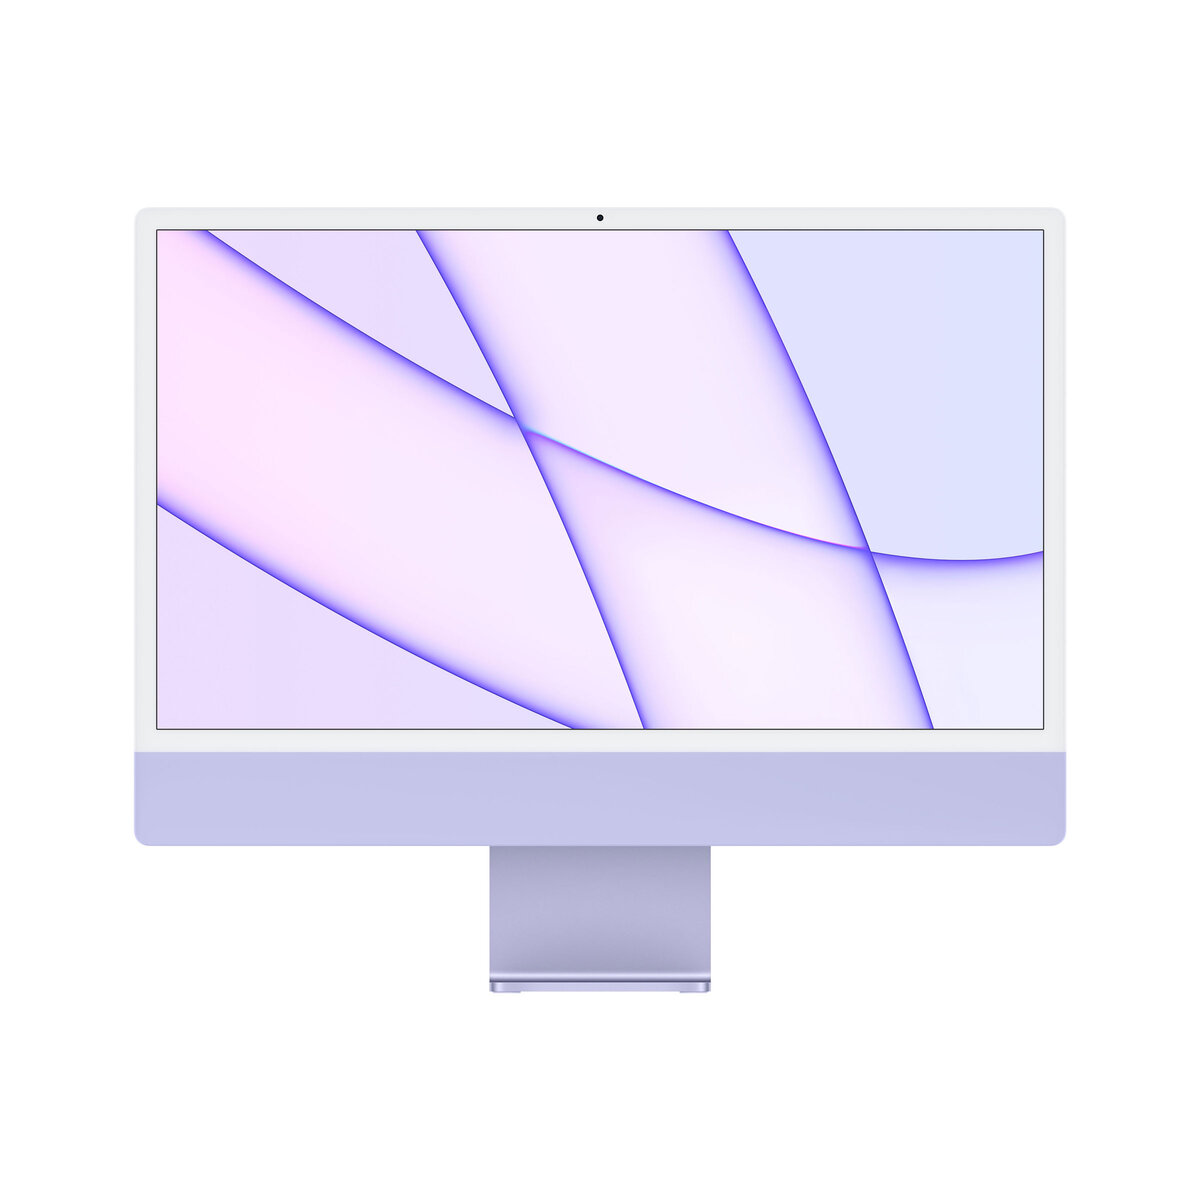 Buy Apple iMac 2021, Apple M1 Chip, 8-Core GPU, 8GB RAM, 512GB SSD, 24 Inch in Purple at costco.co.uk